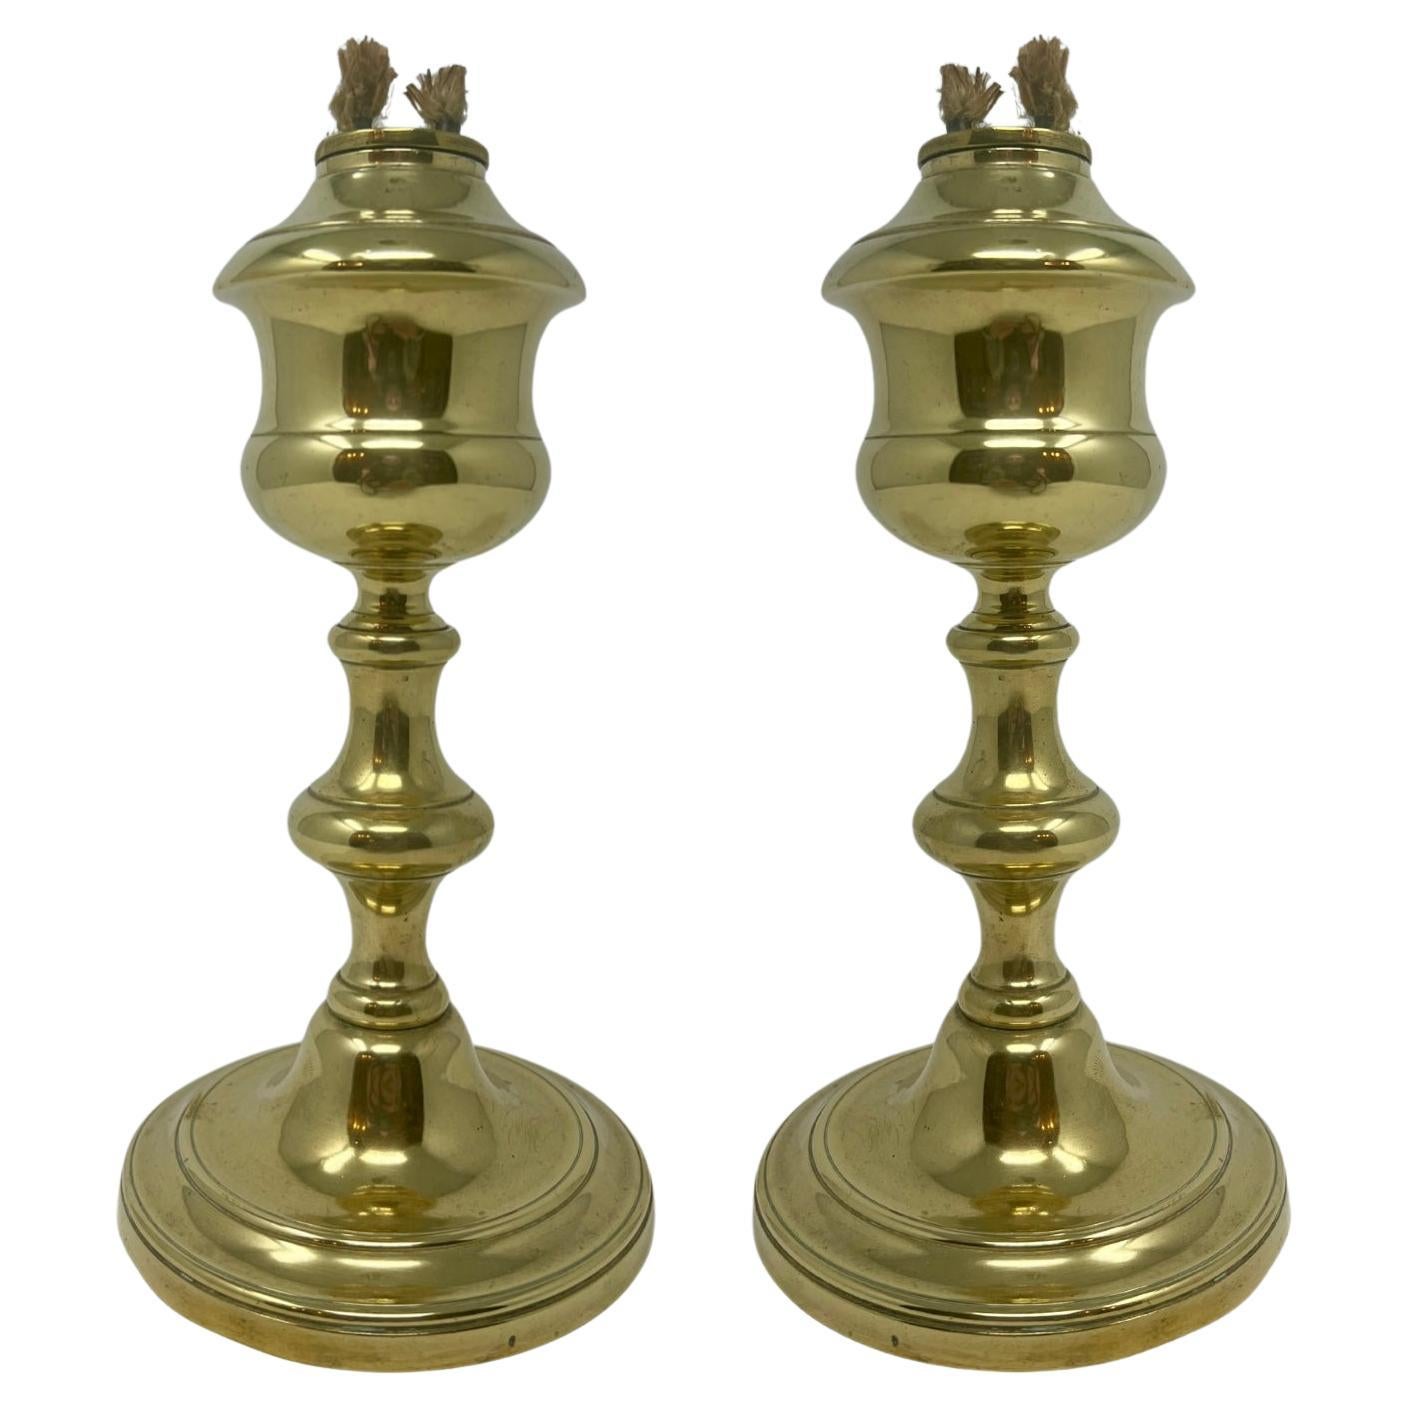 Pair Antique Brass Whale Oil Lamp Candlesticks, Circa 1830's.